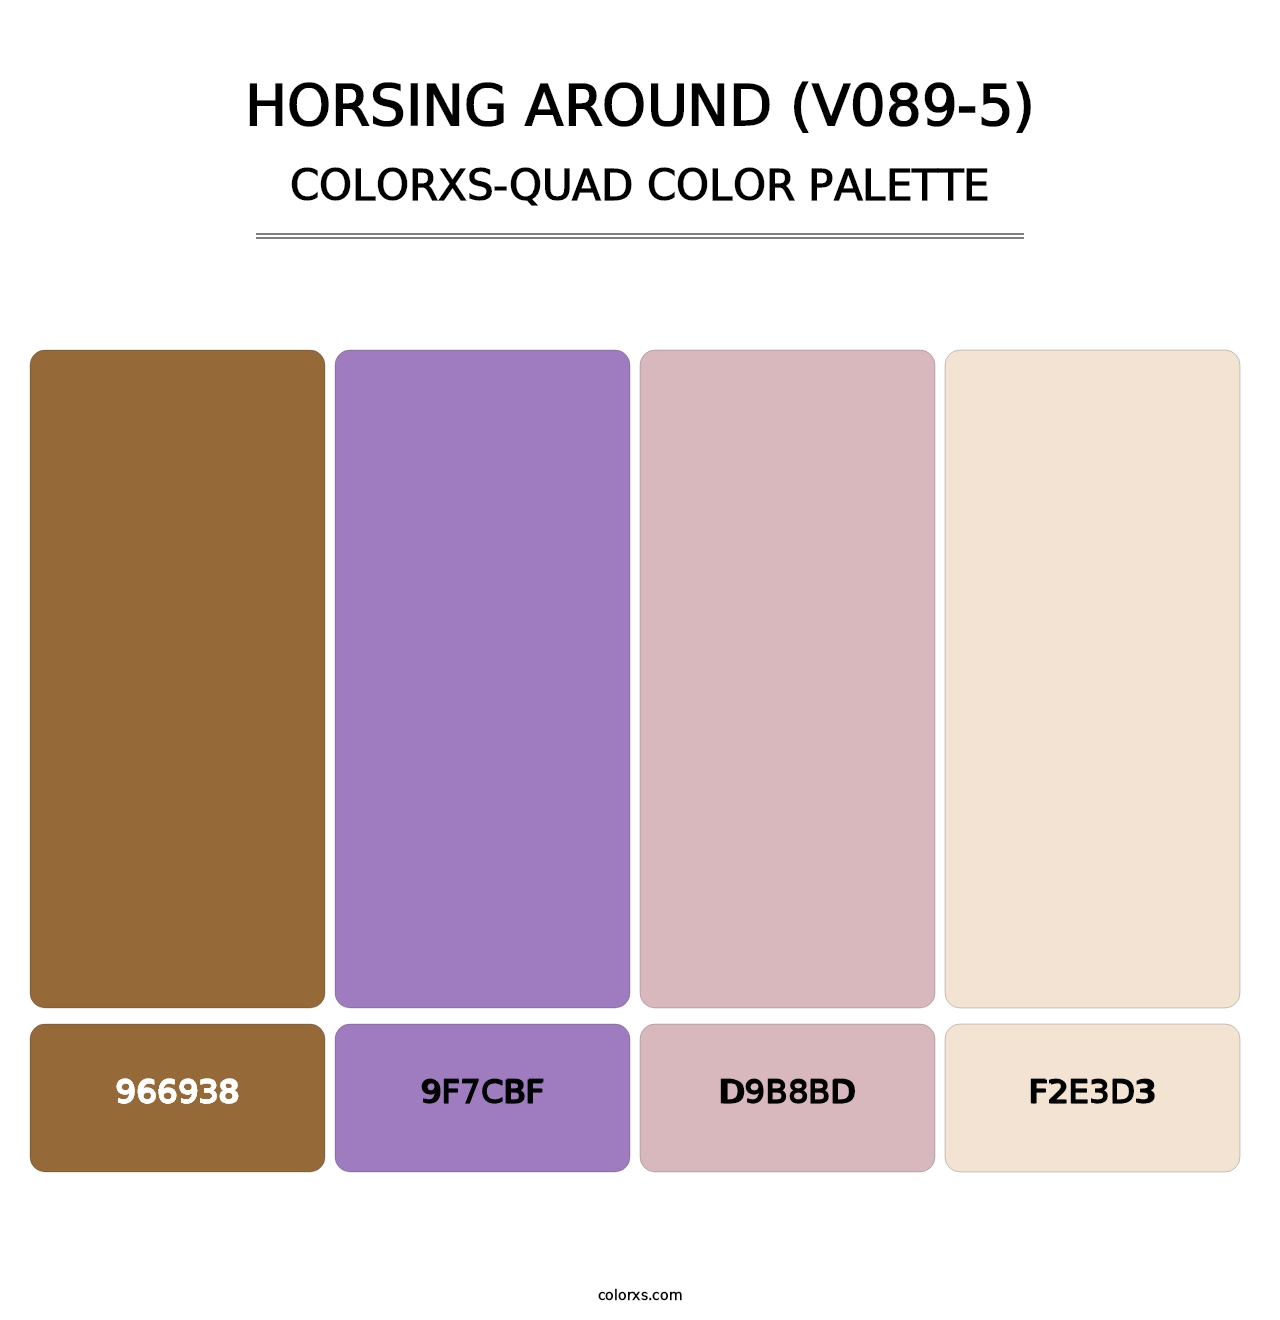 Horsing Around (V089-5) - Colorxs Quad Palette